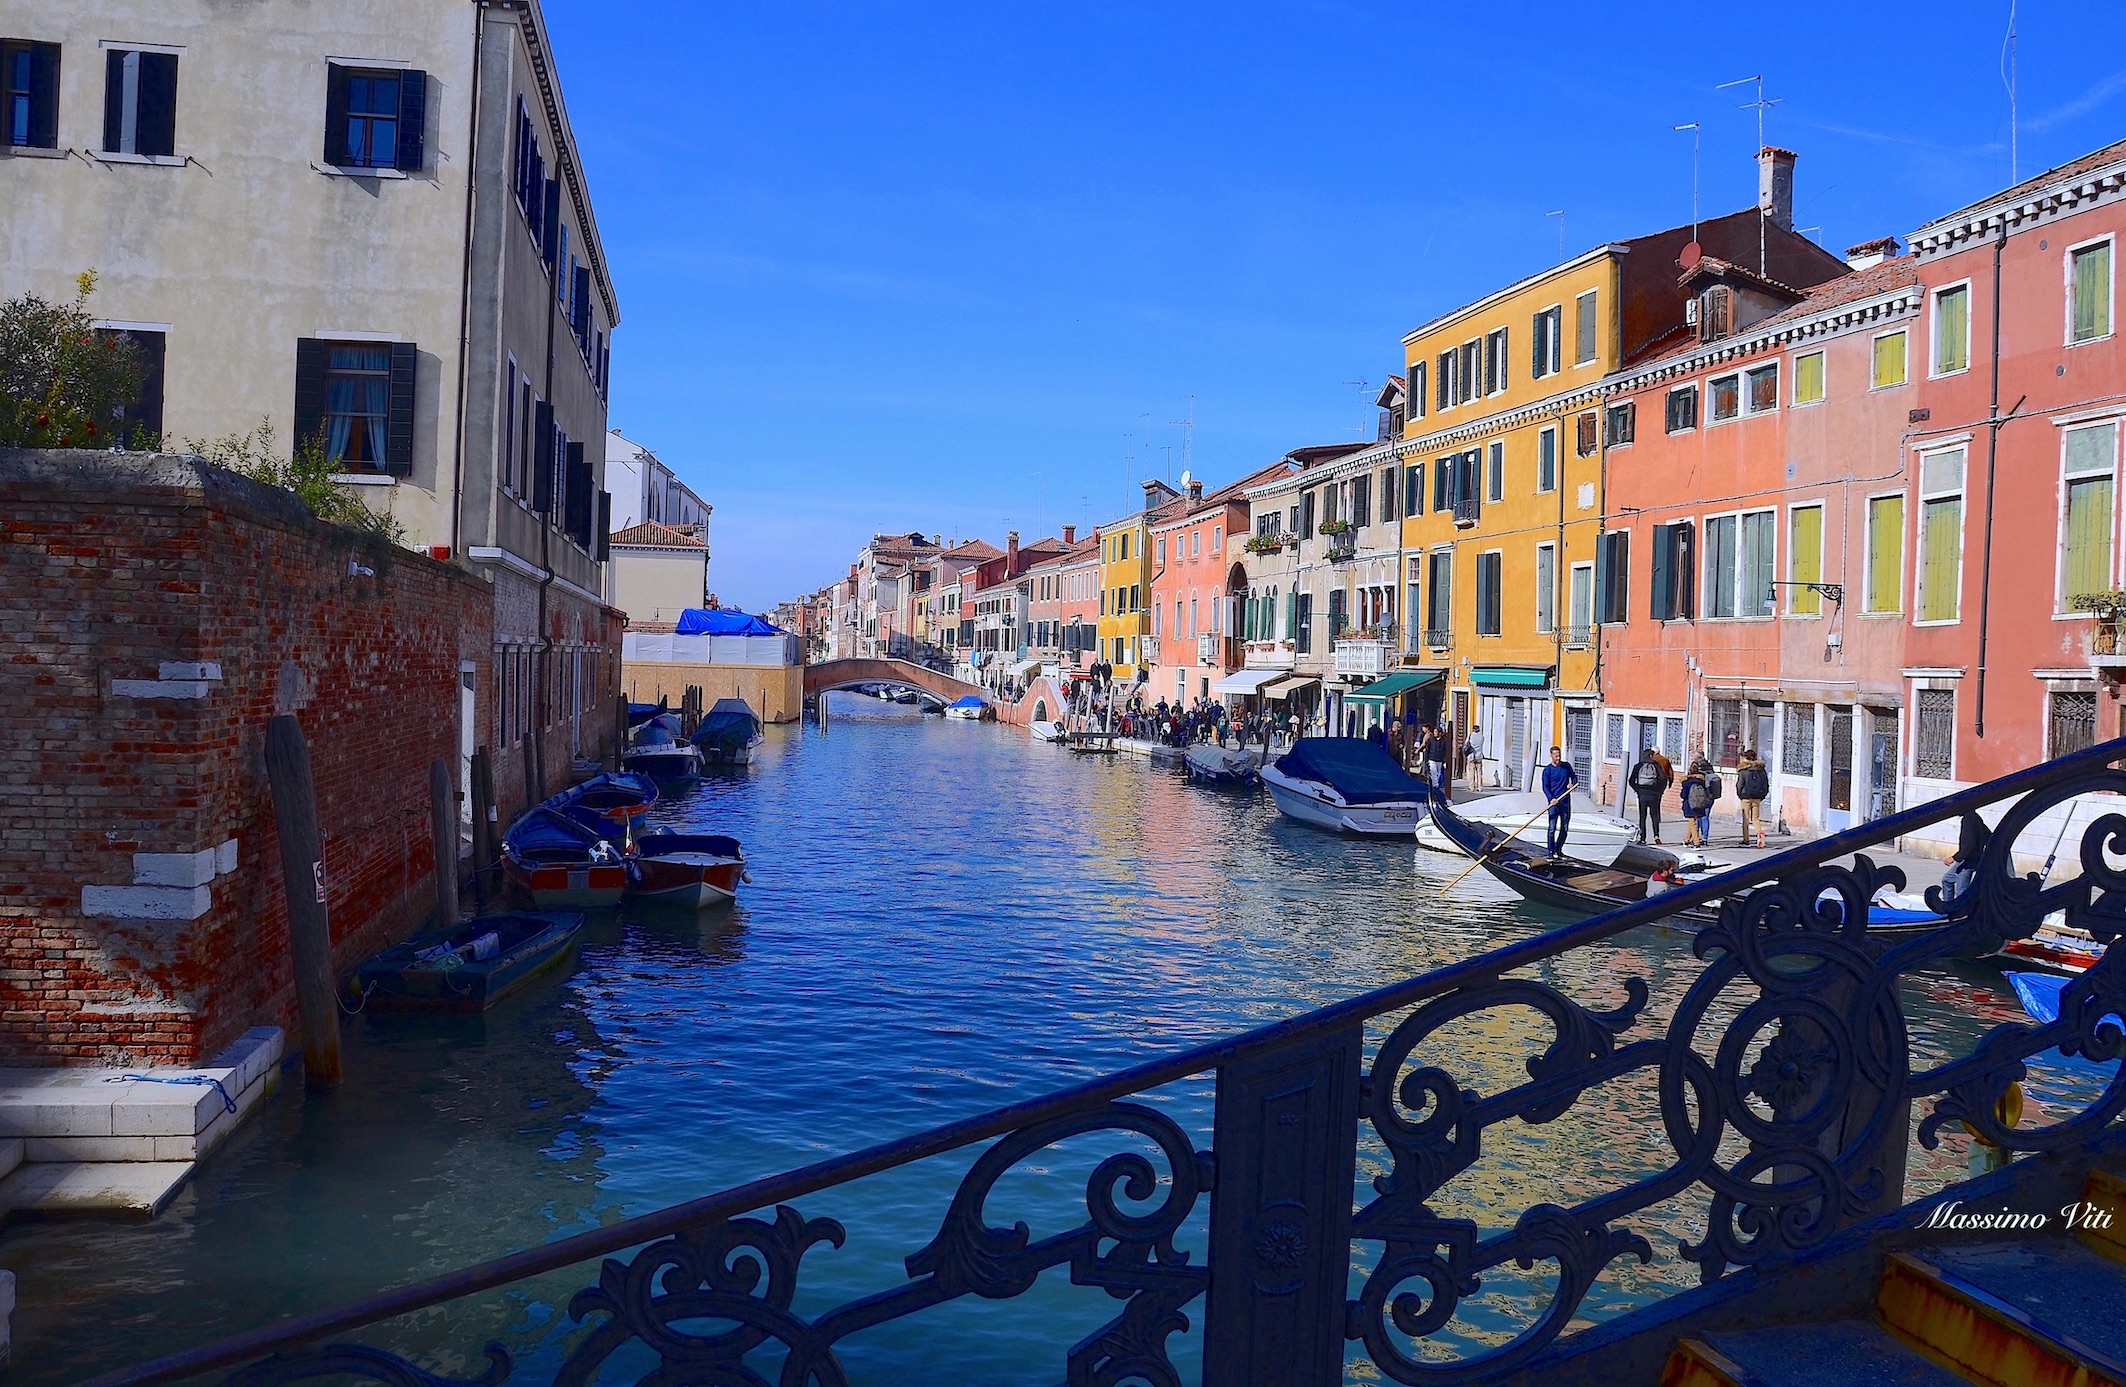 Venetian views ...